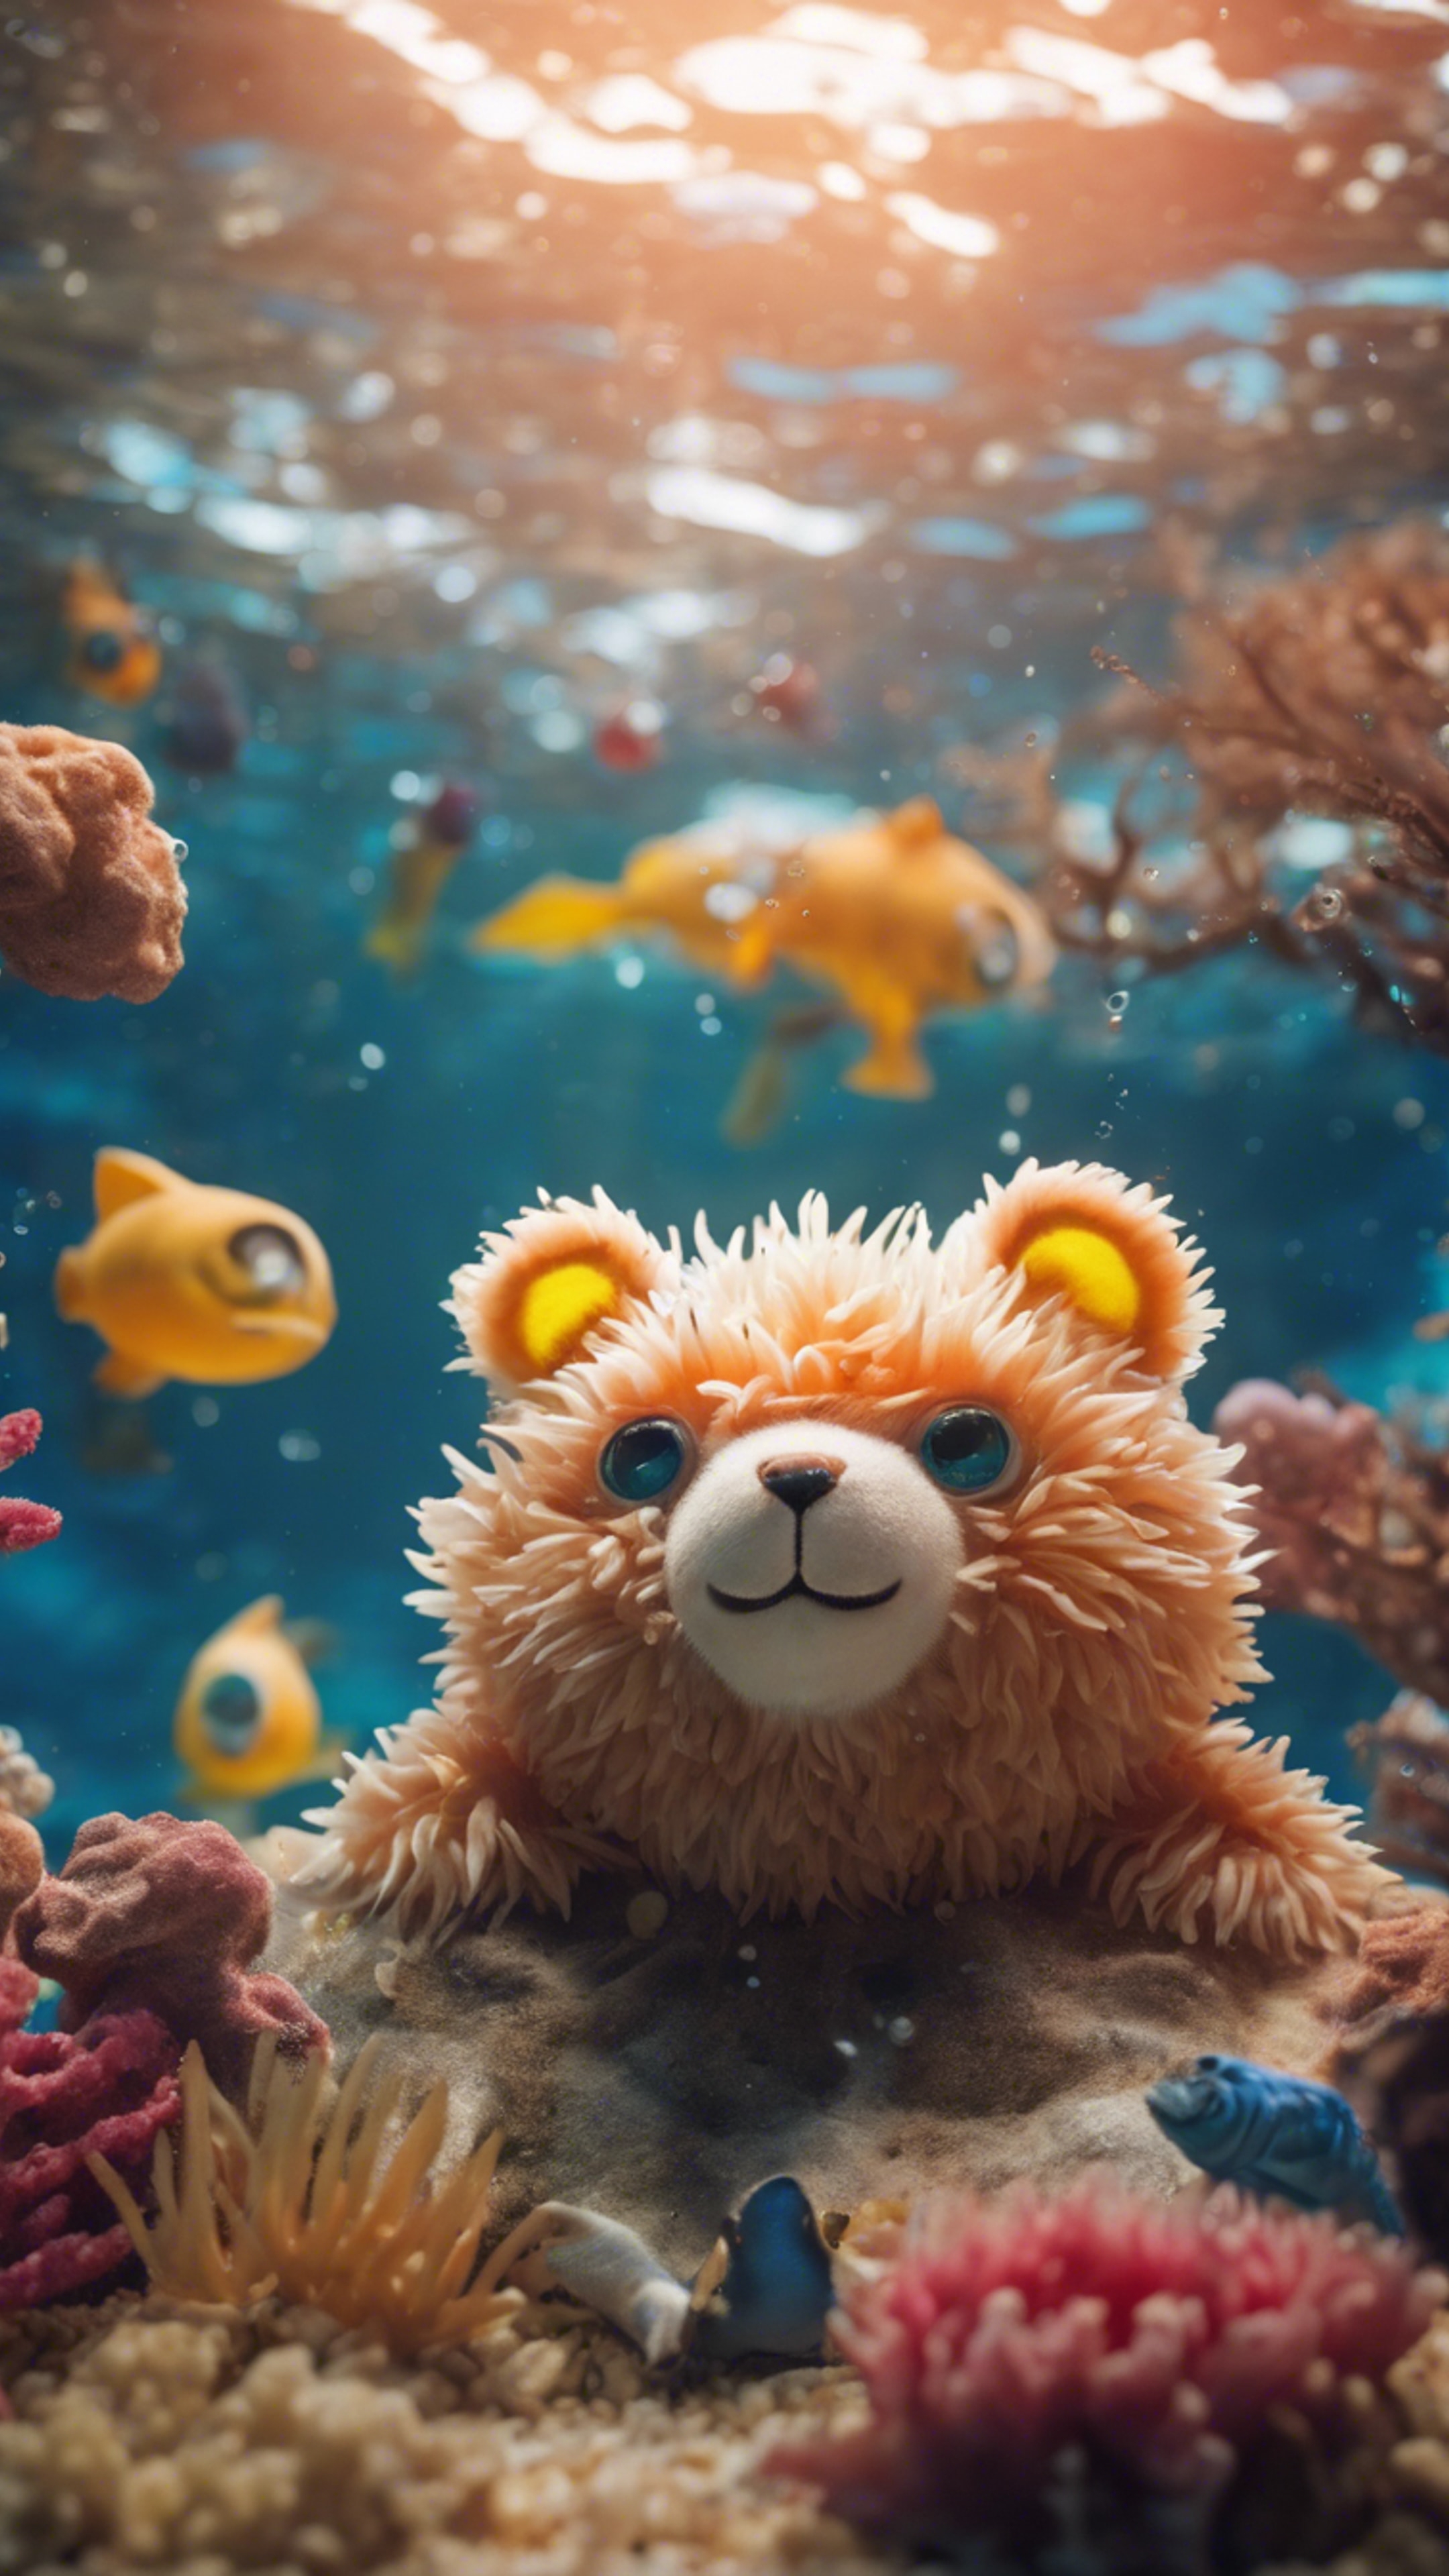 A teddy bear fish in a vibrant underwater scene, accompanied by toy sea creatures.壁紙[d911cb6a8b744c4b8bd9]